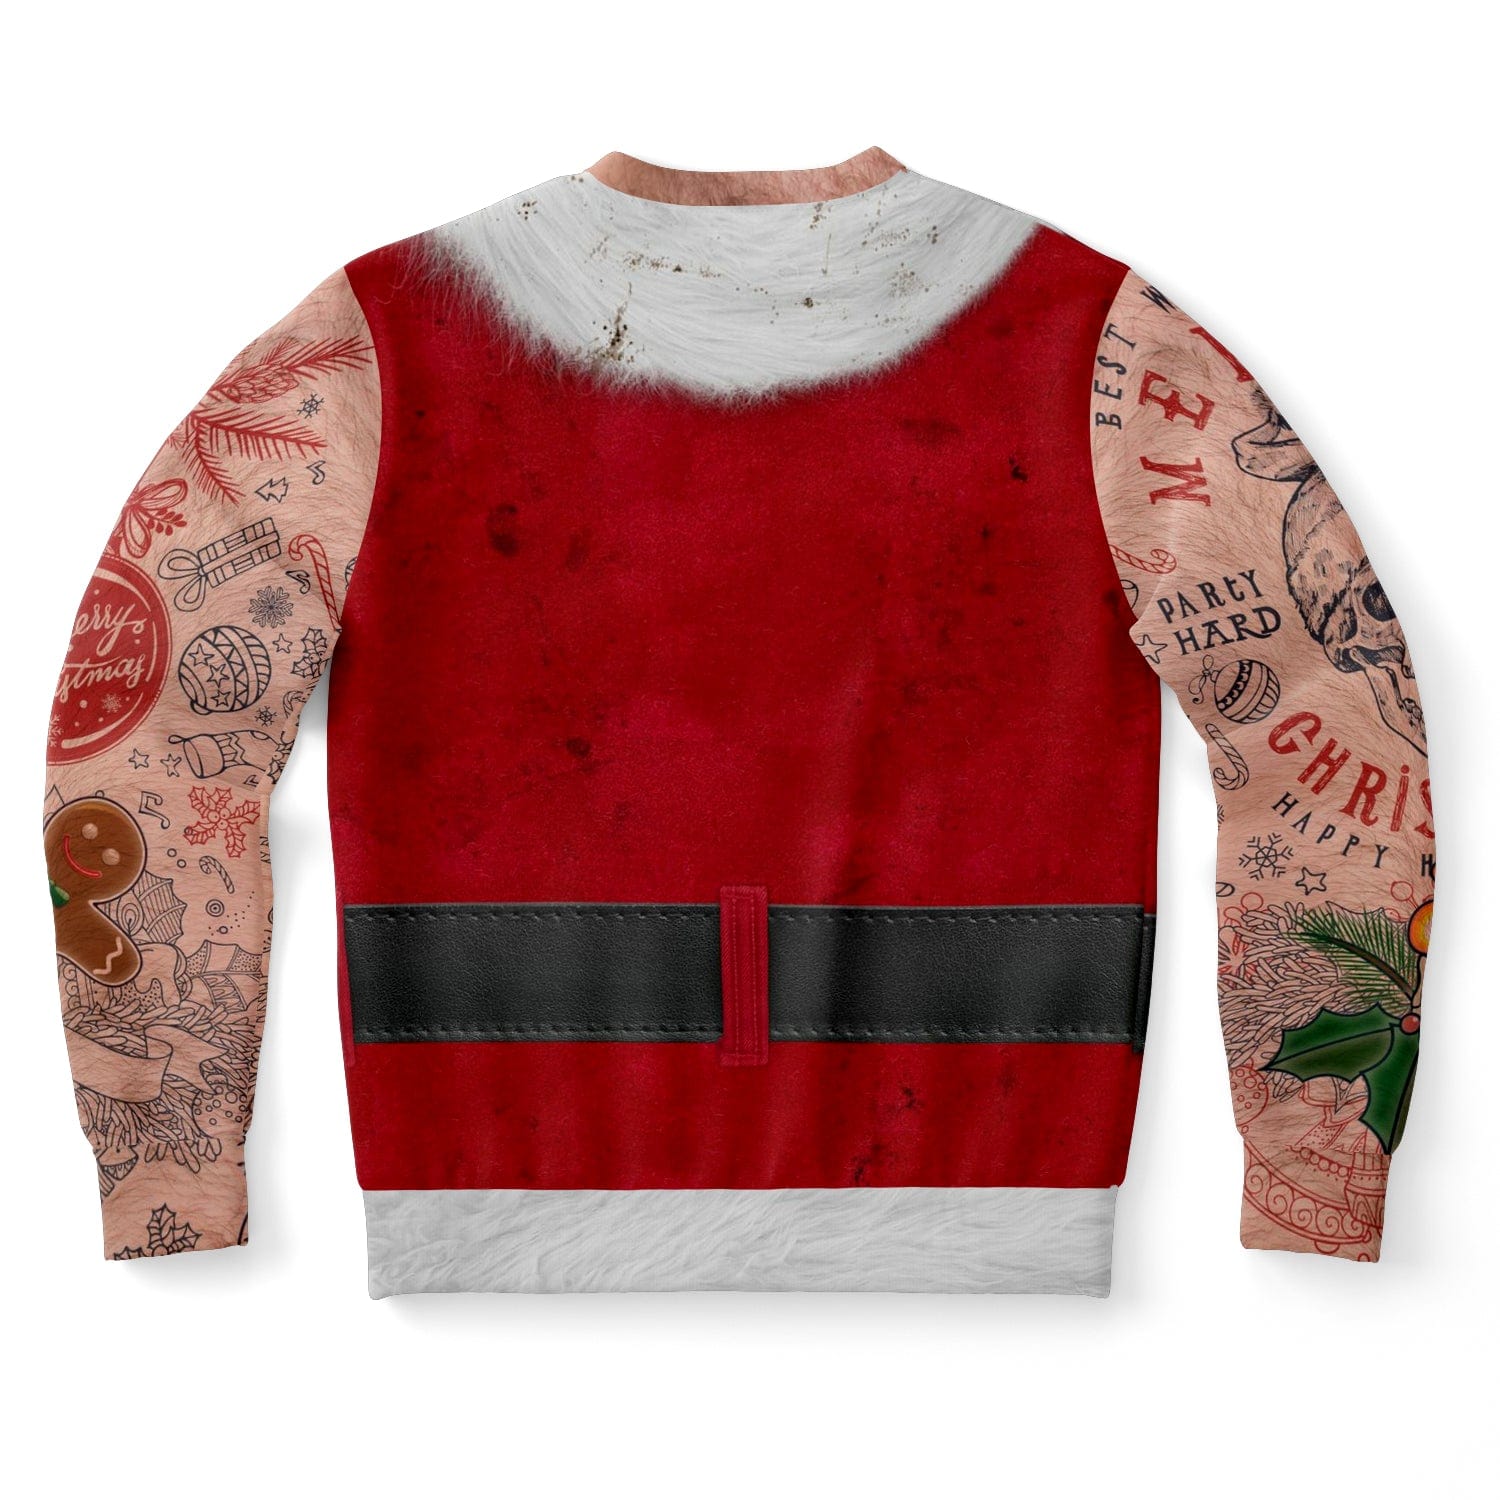 Kate McEnroe New York Sleeveless Bad Santa Ugly Christmas SweatersSweatshirtSBSWF_D - HSM5V - XS